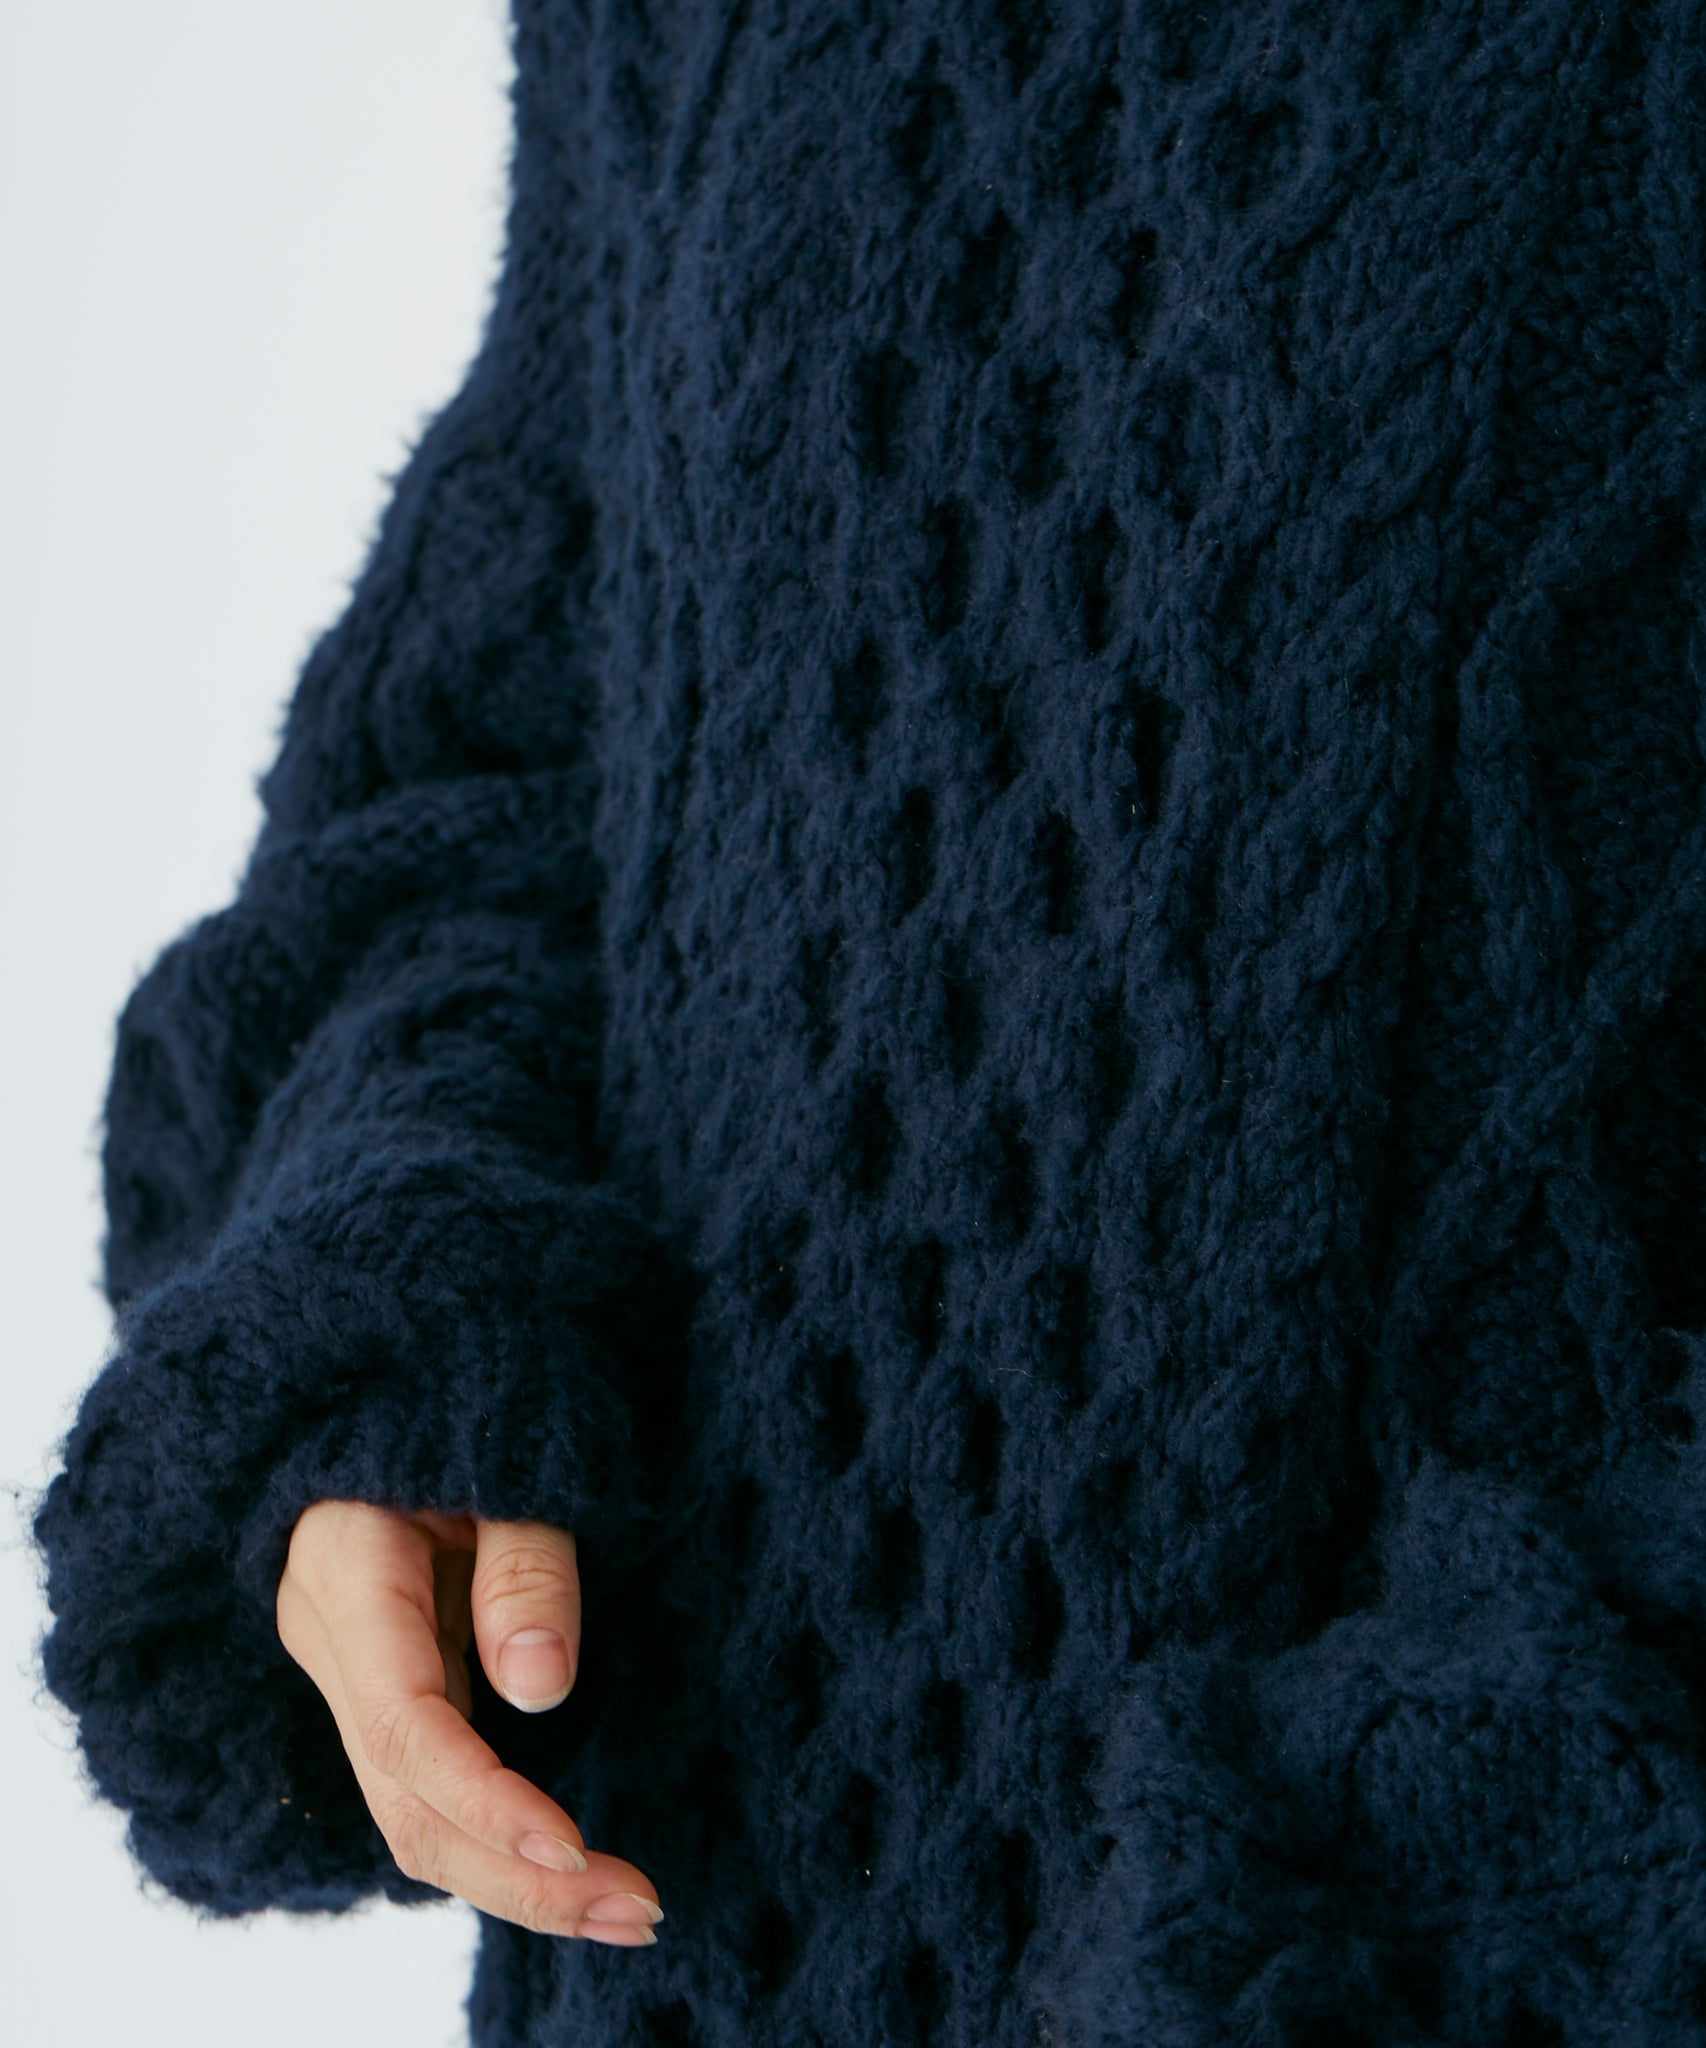 cashmere aran knit